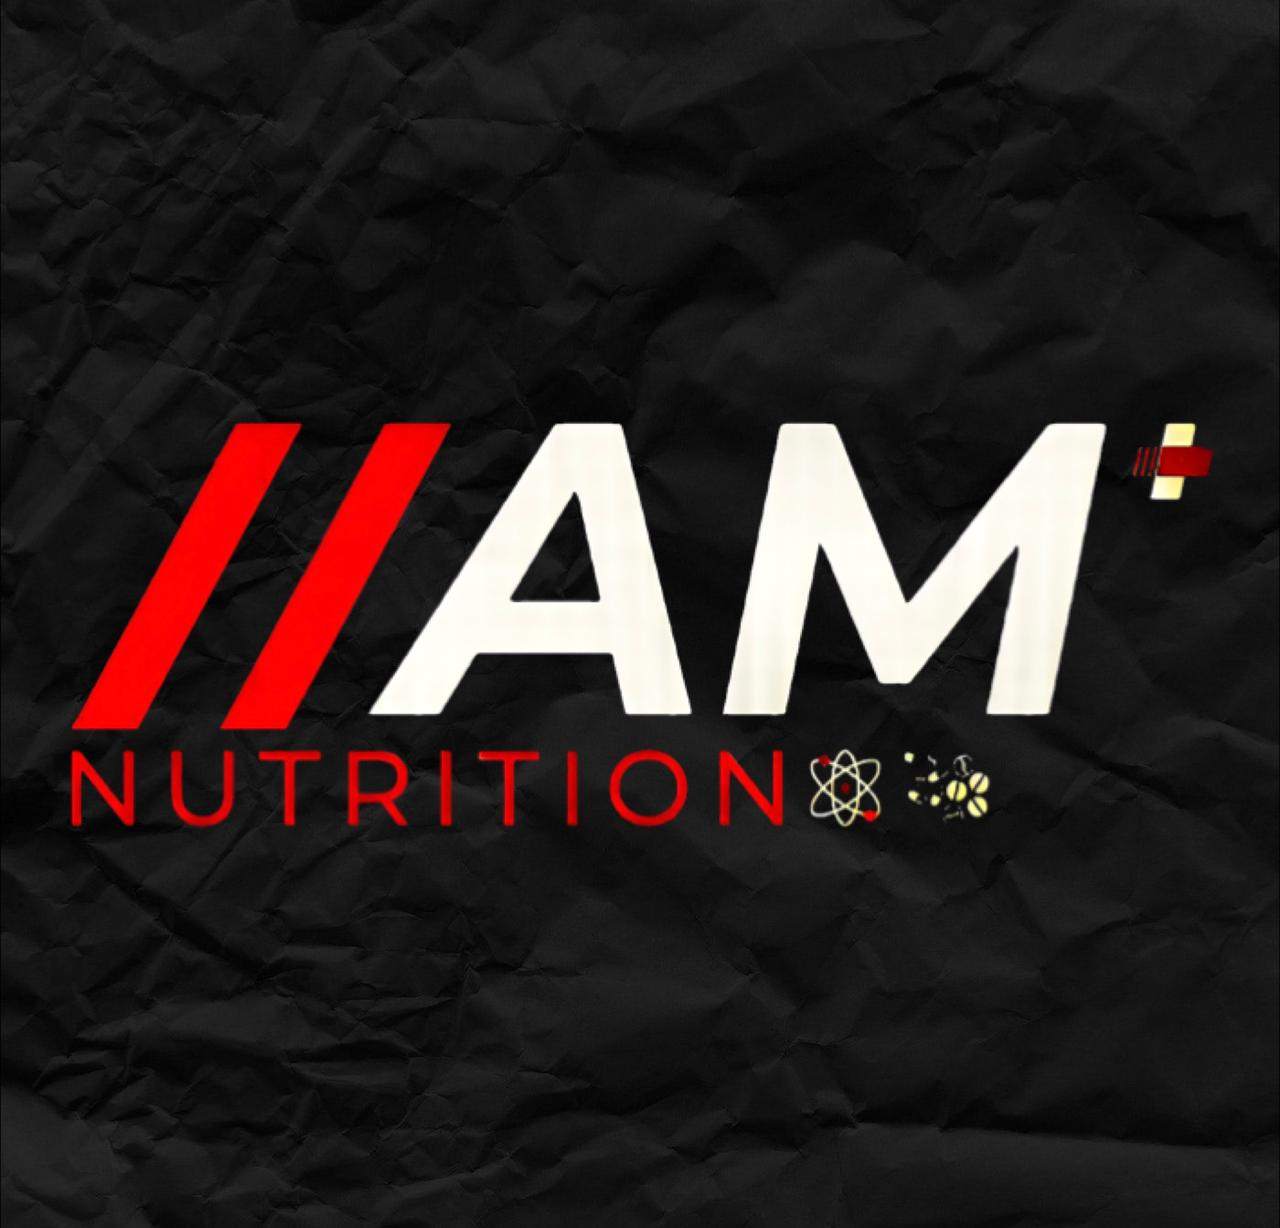 AM Nutrition